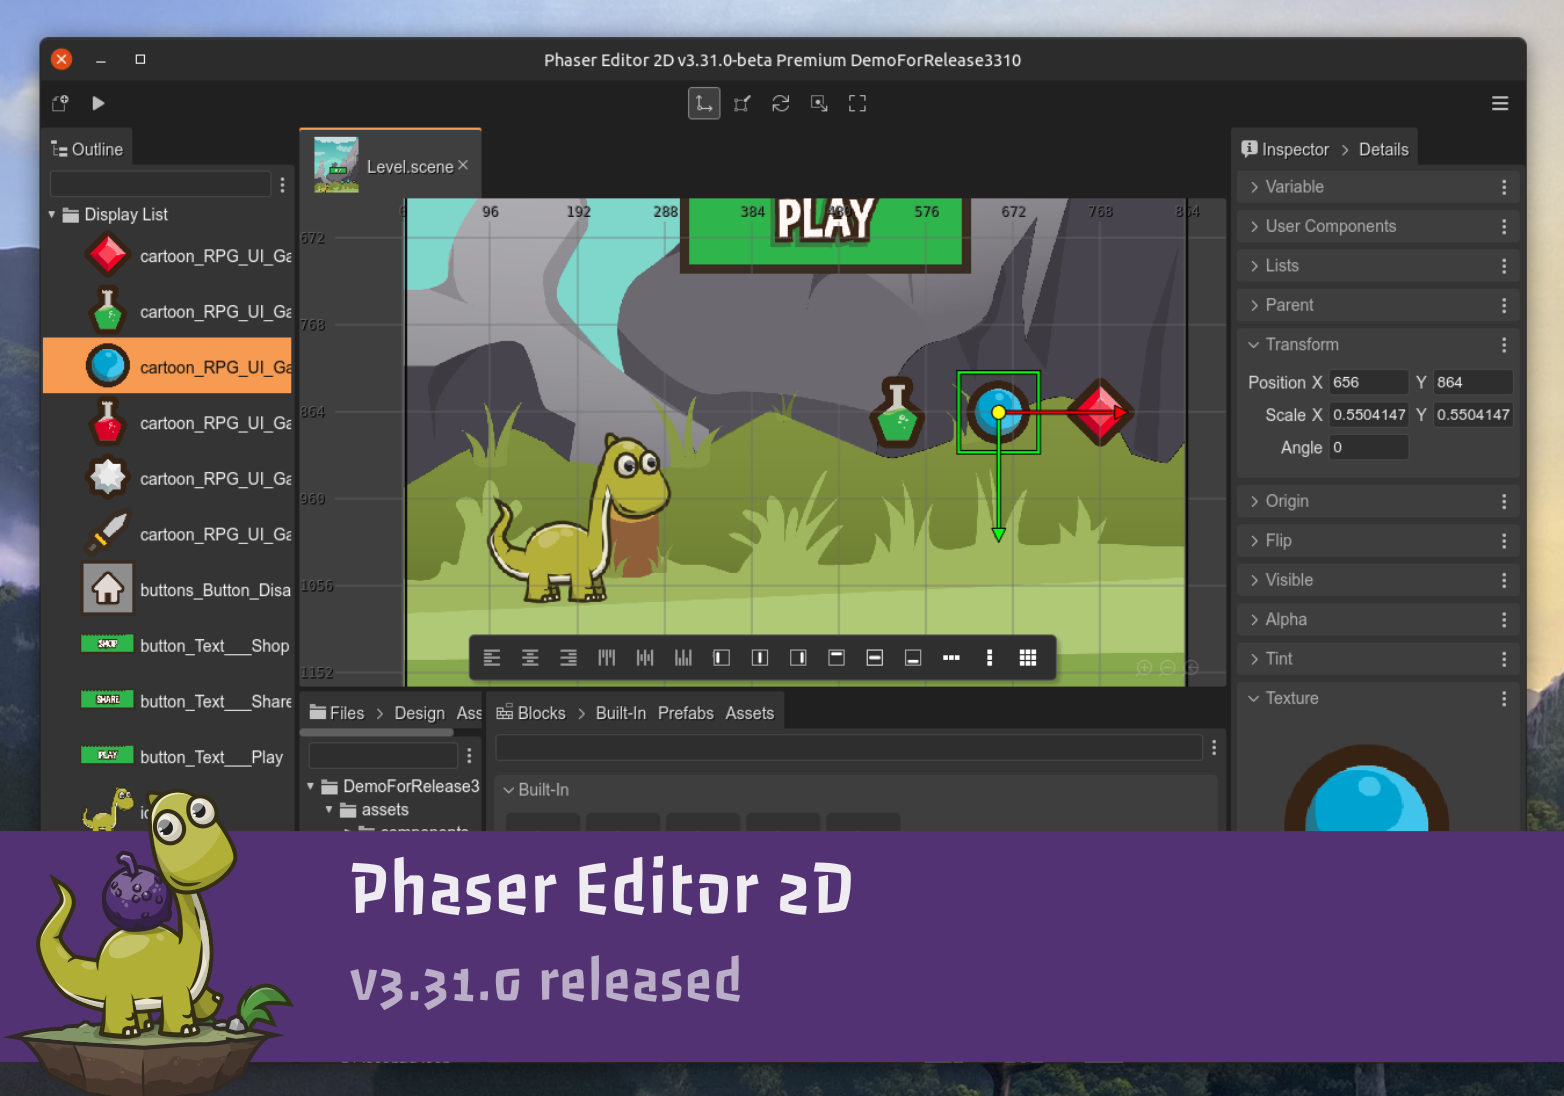 Phaser Editor 2D v3.31.0 released.